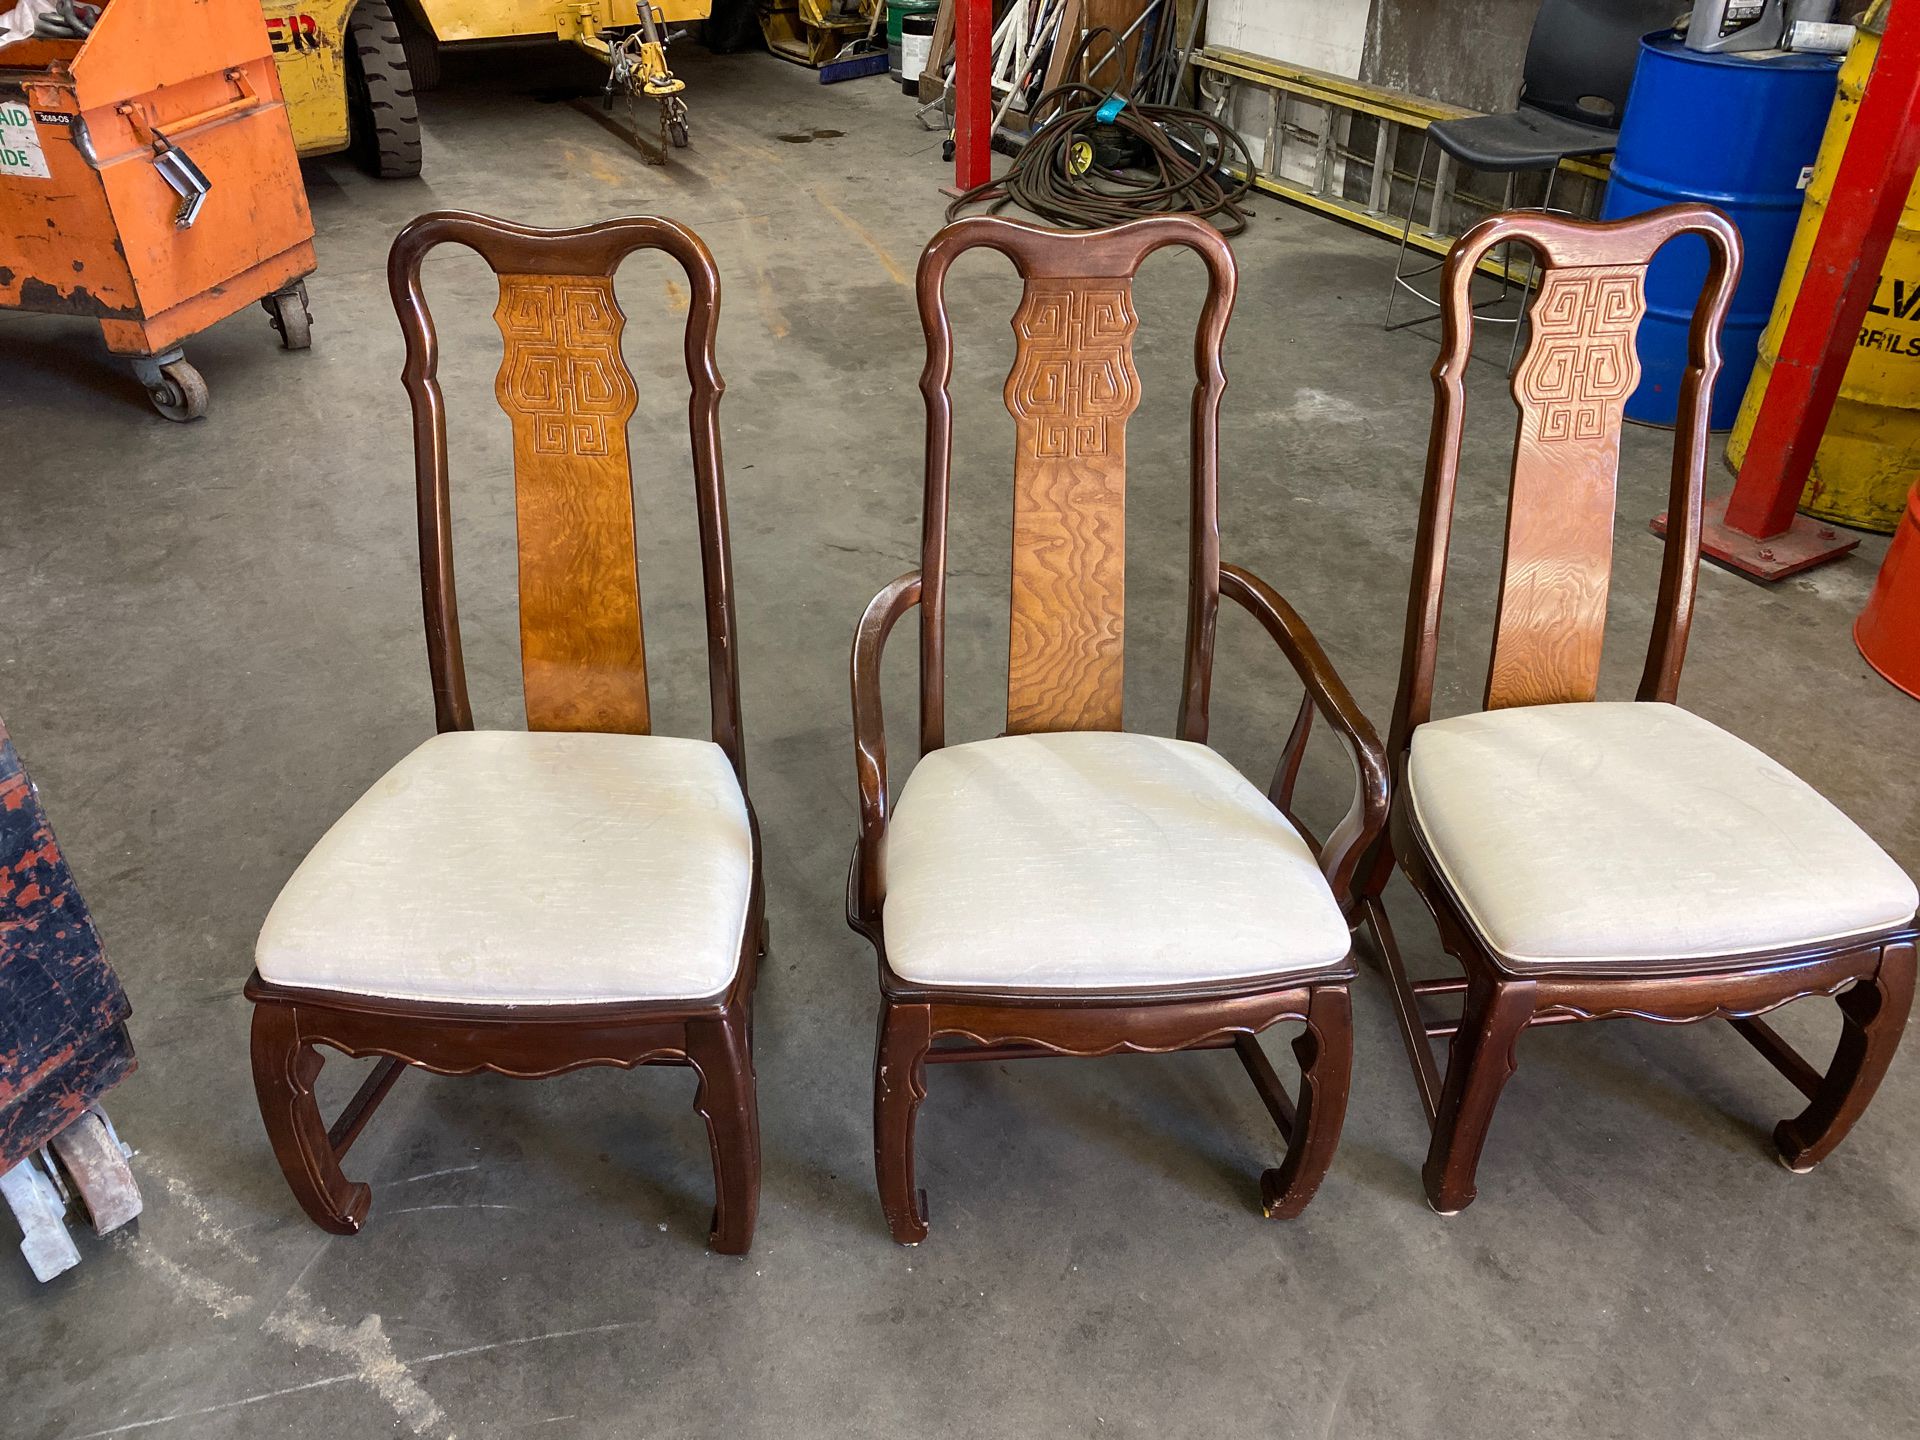 Antique chairs $20 each